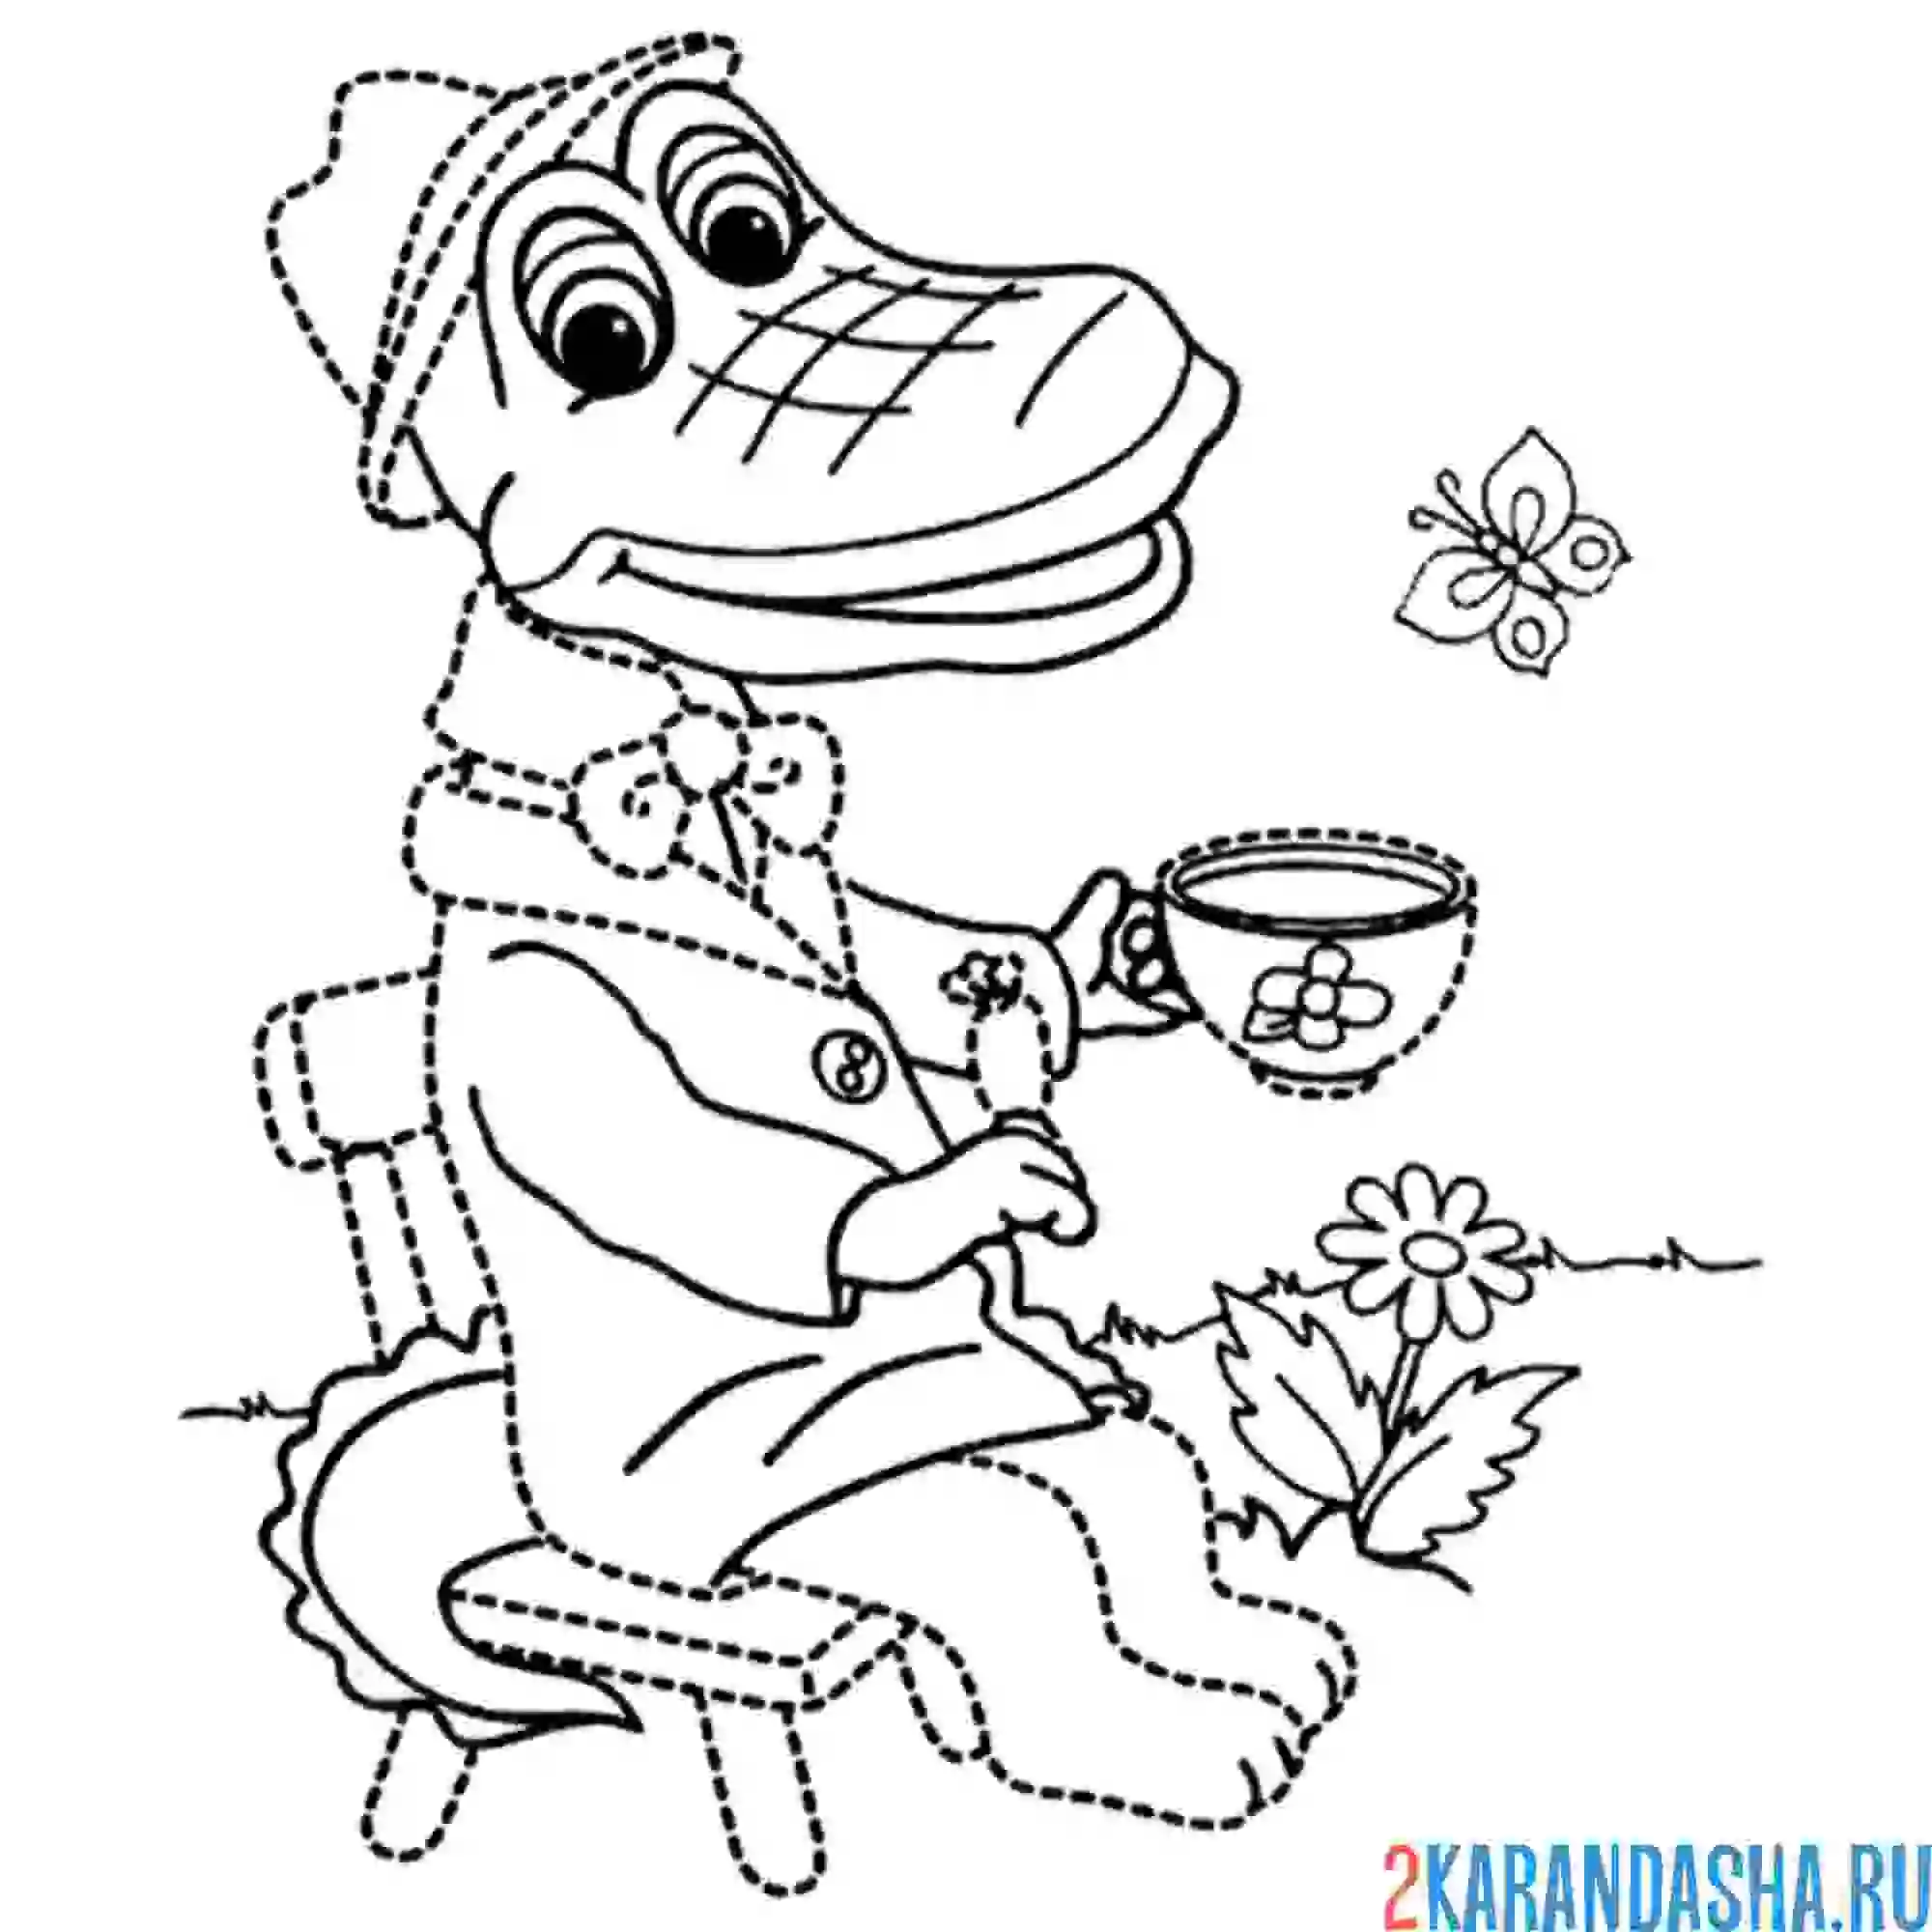 Раскраска крокодил гена пьет чай